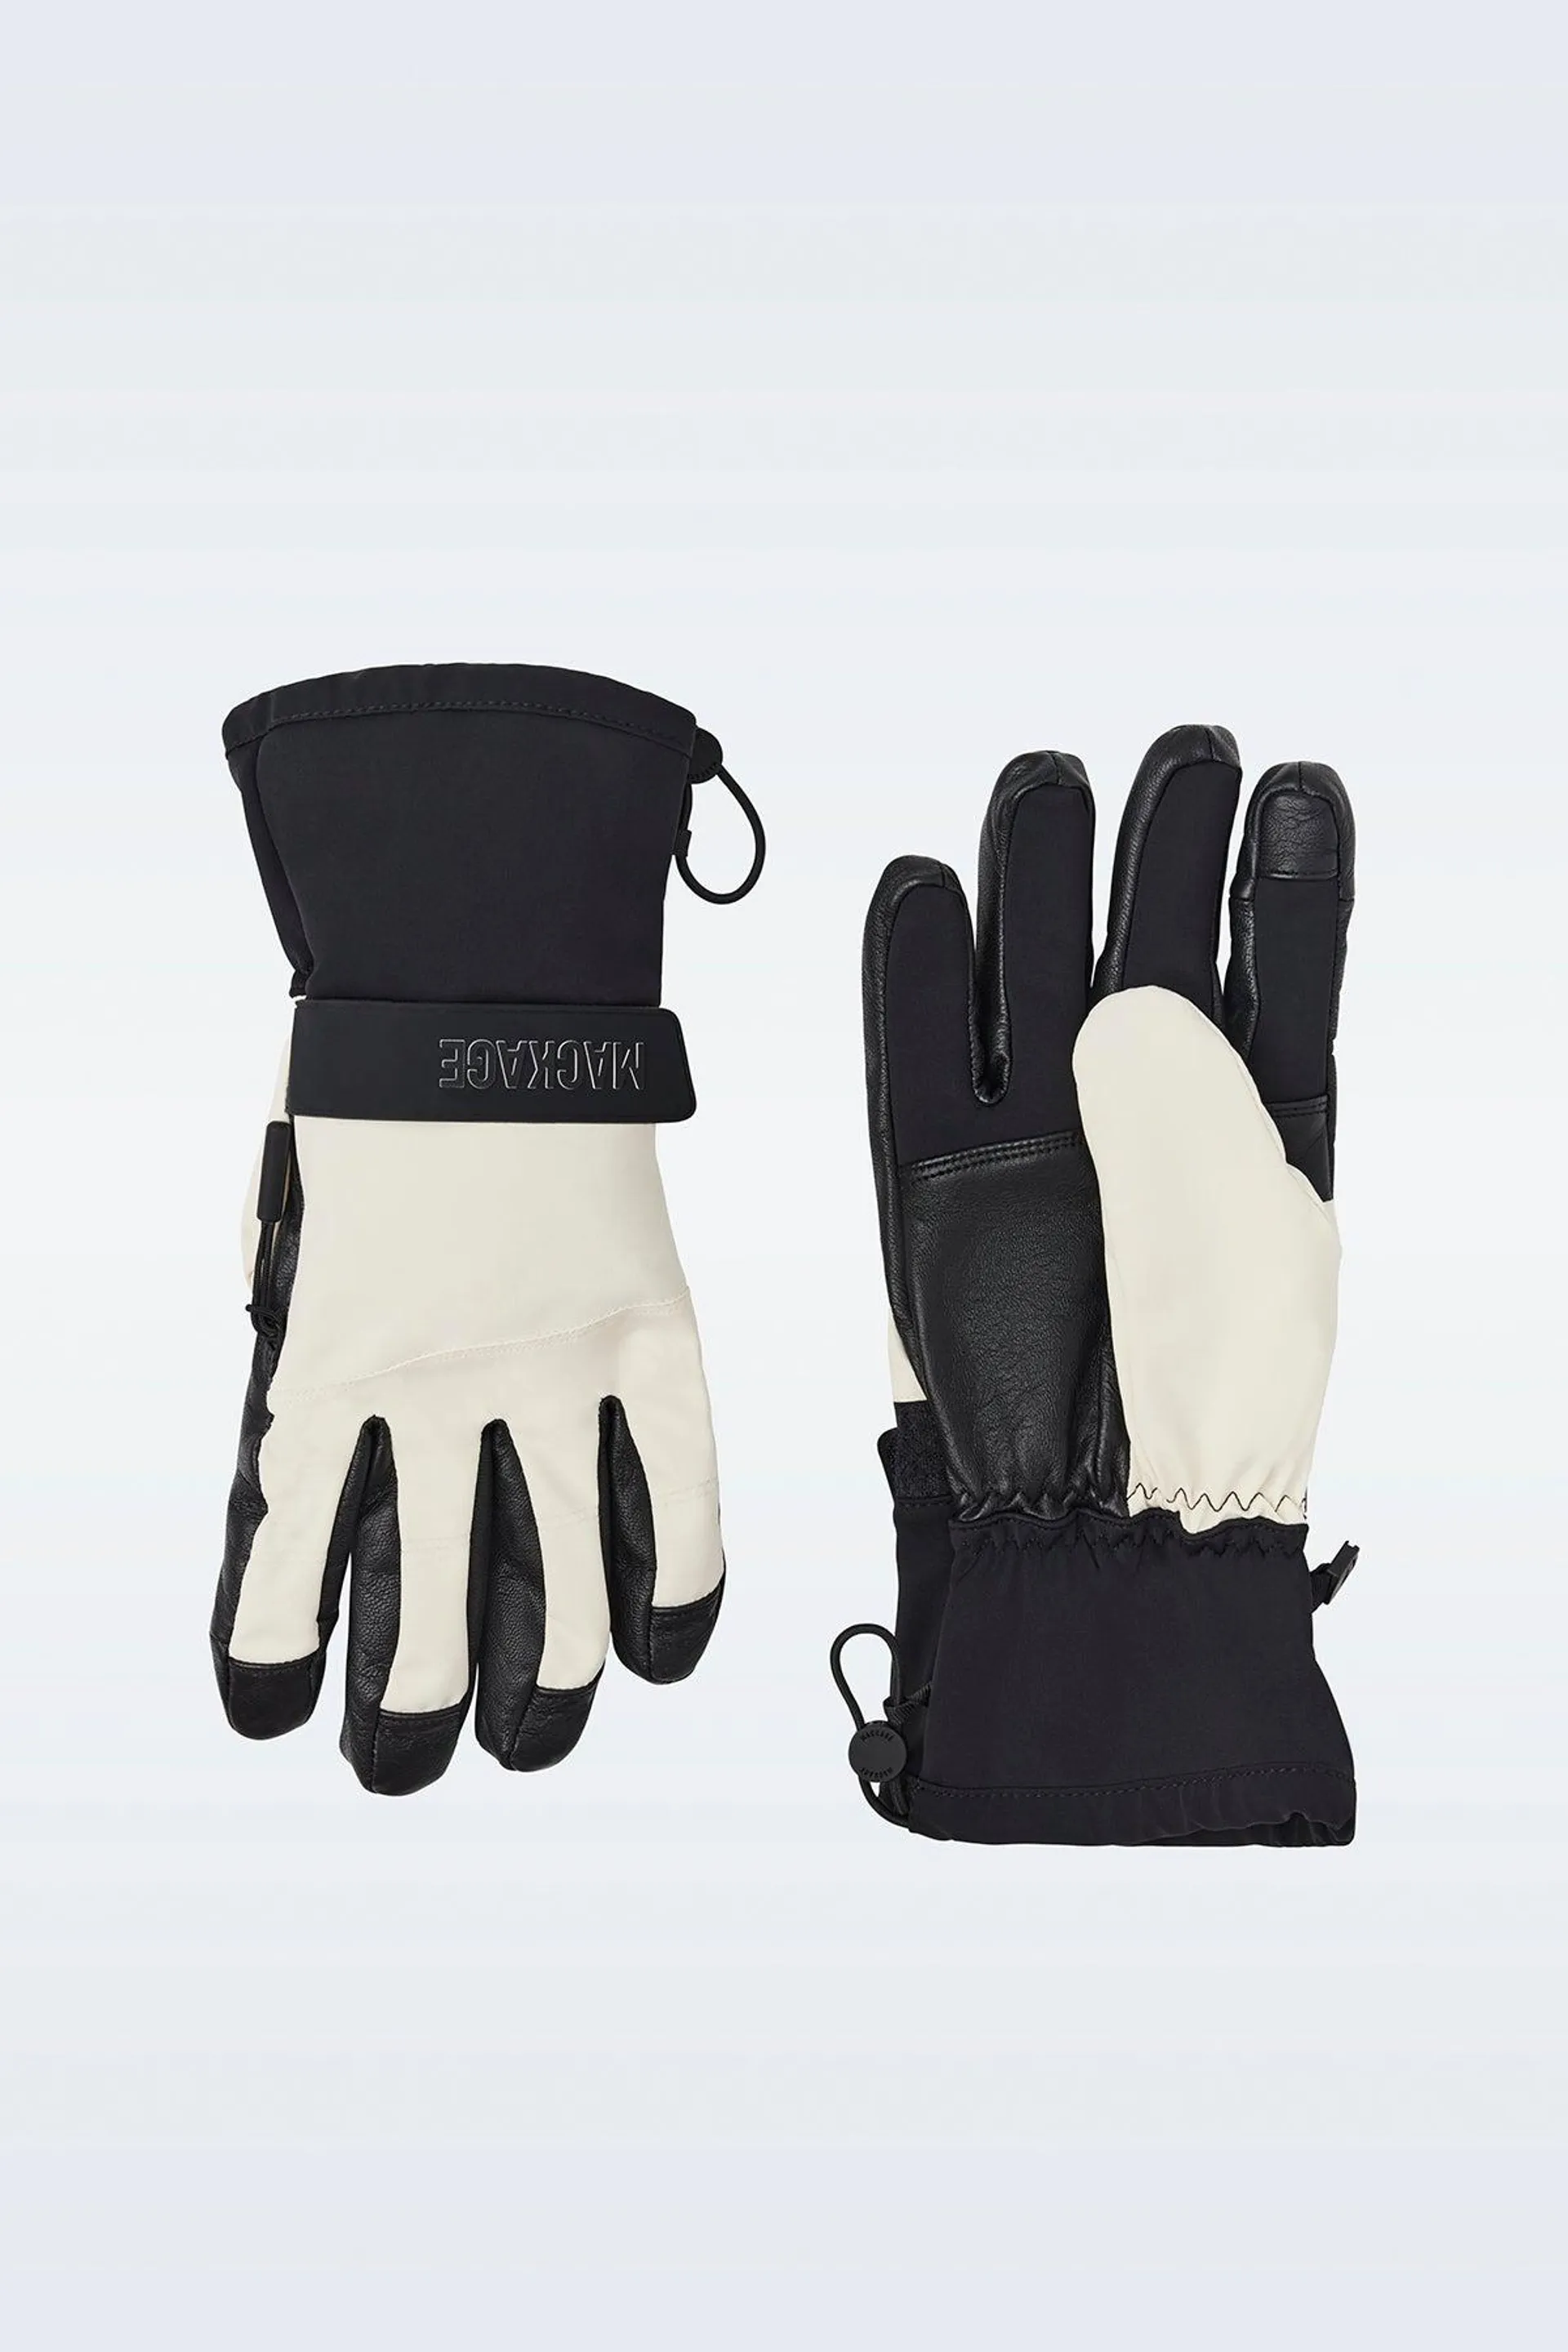 SWYFT 2-layer technical ski gloves